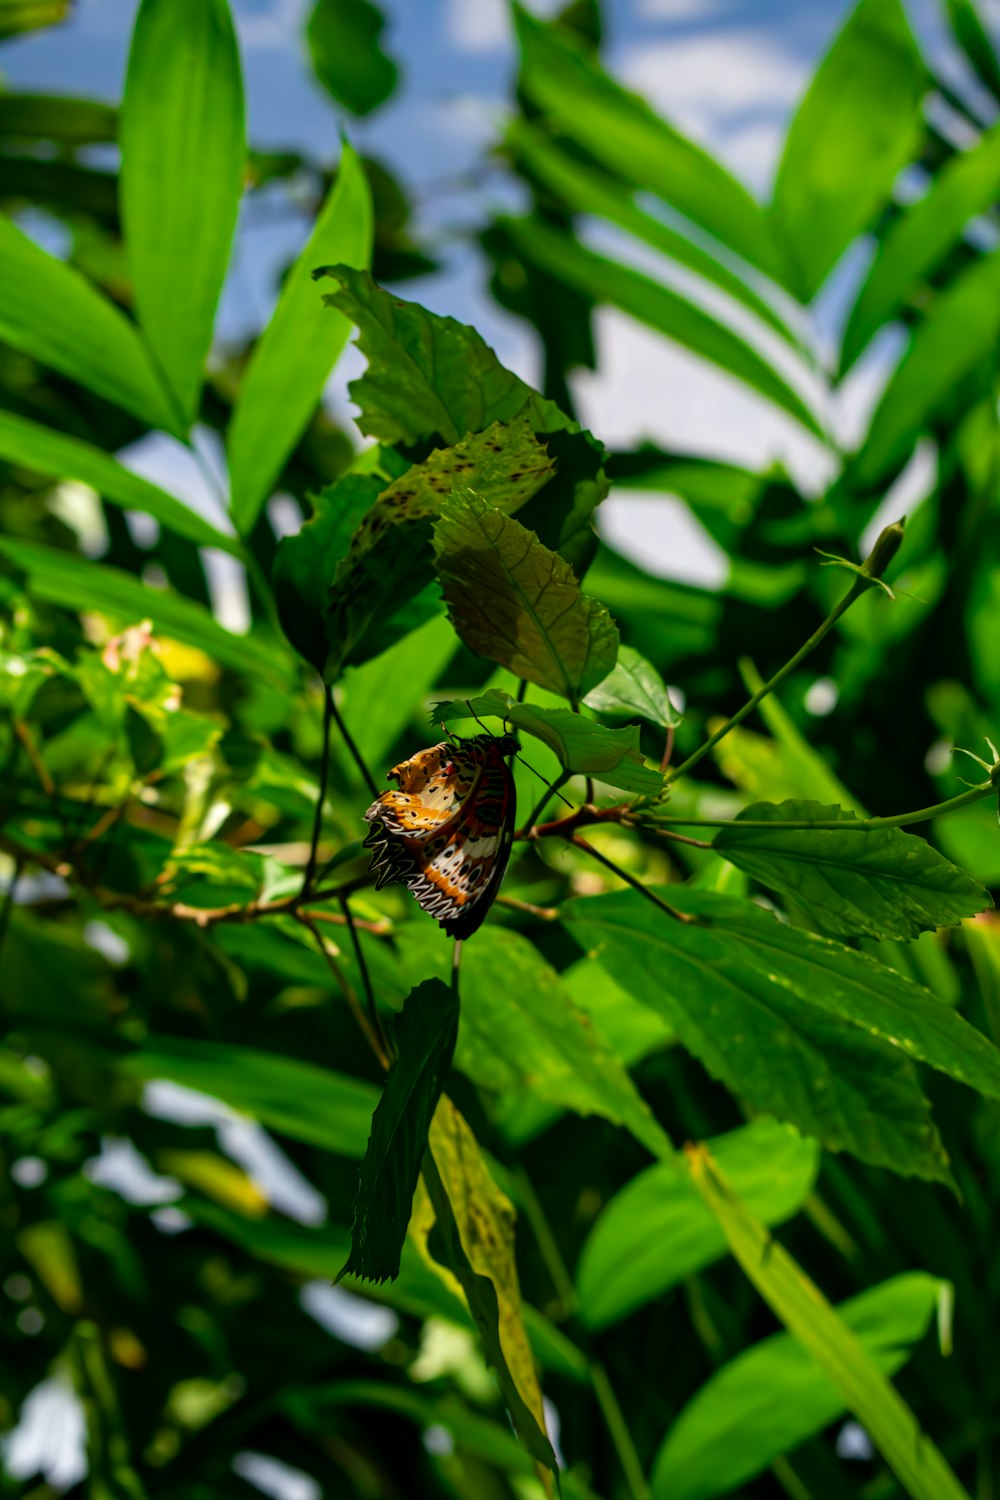 a spider crawling on a leafy green plant